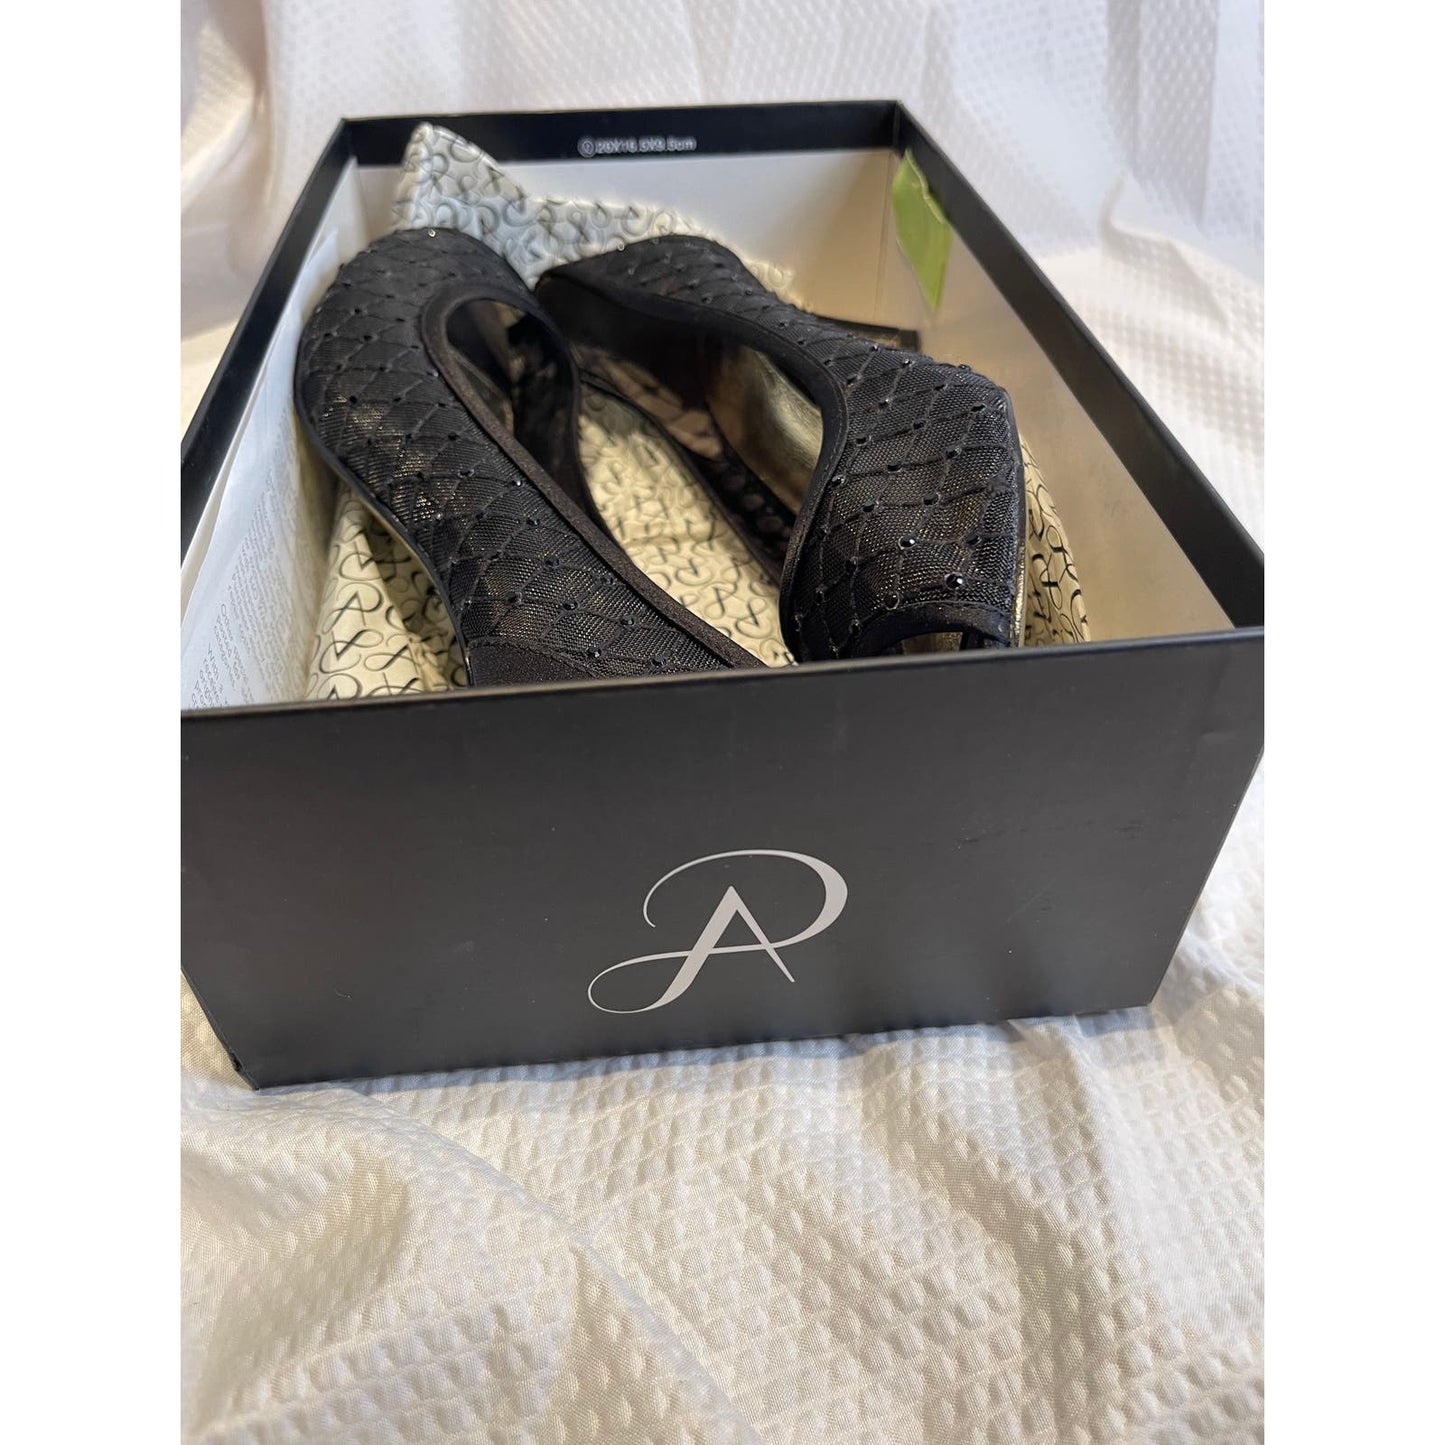 Adrianna Papell Women's Size 6.5 Black Heels - With Original Box